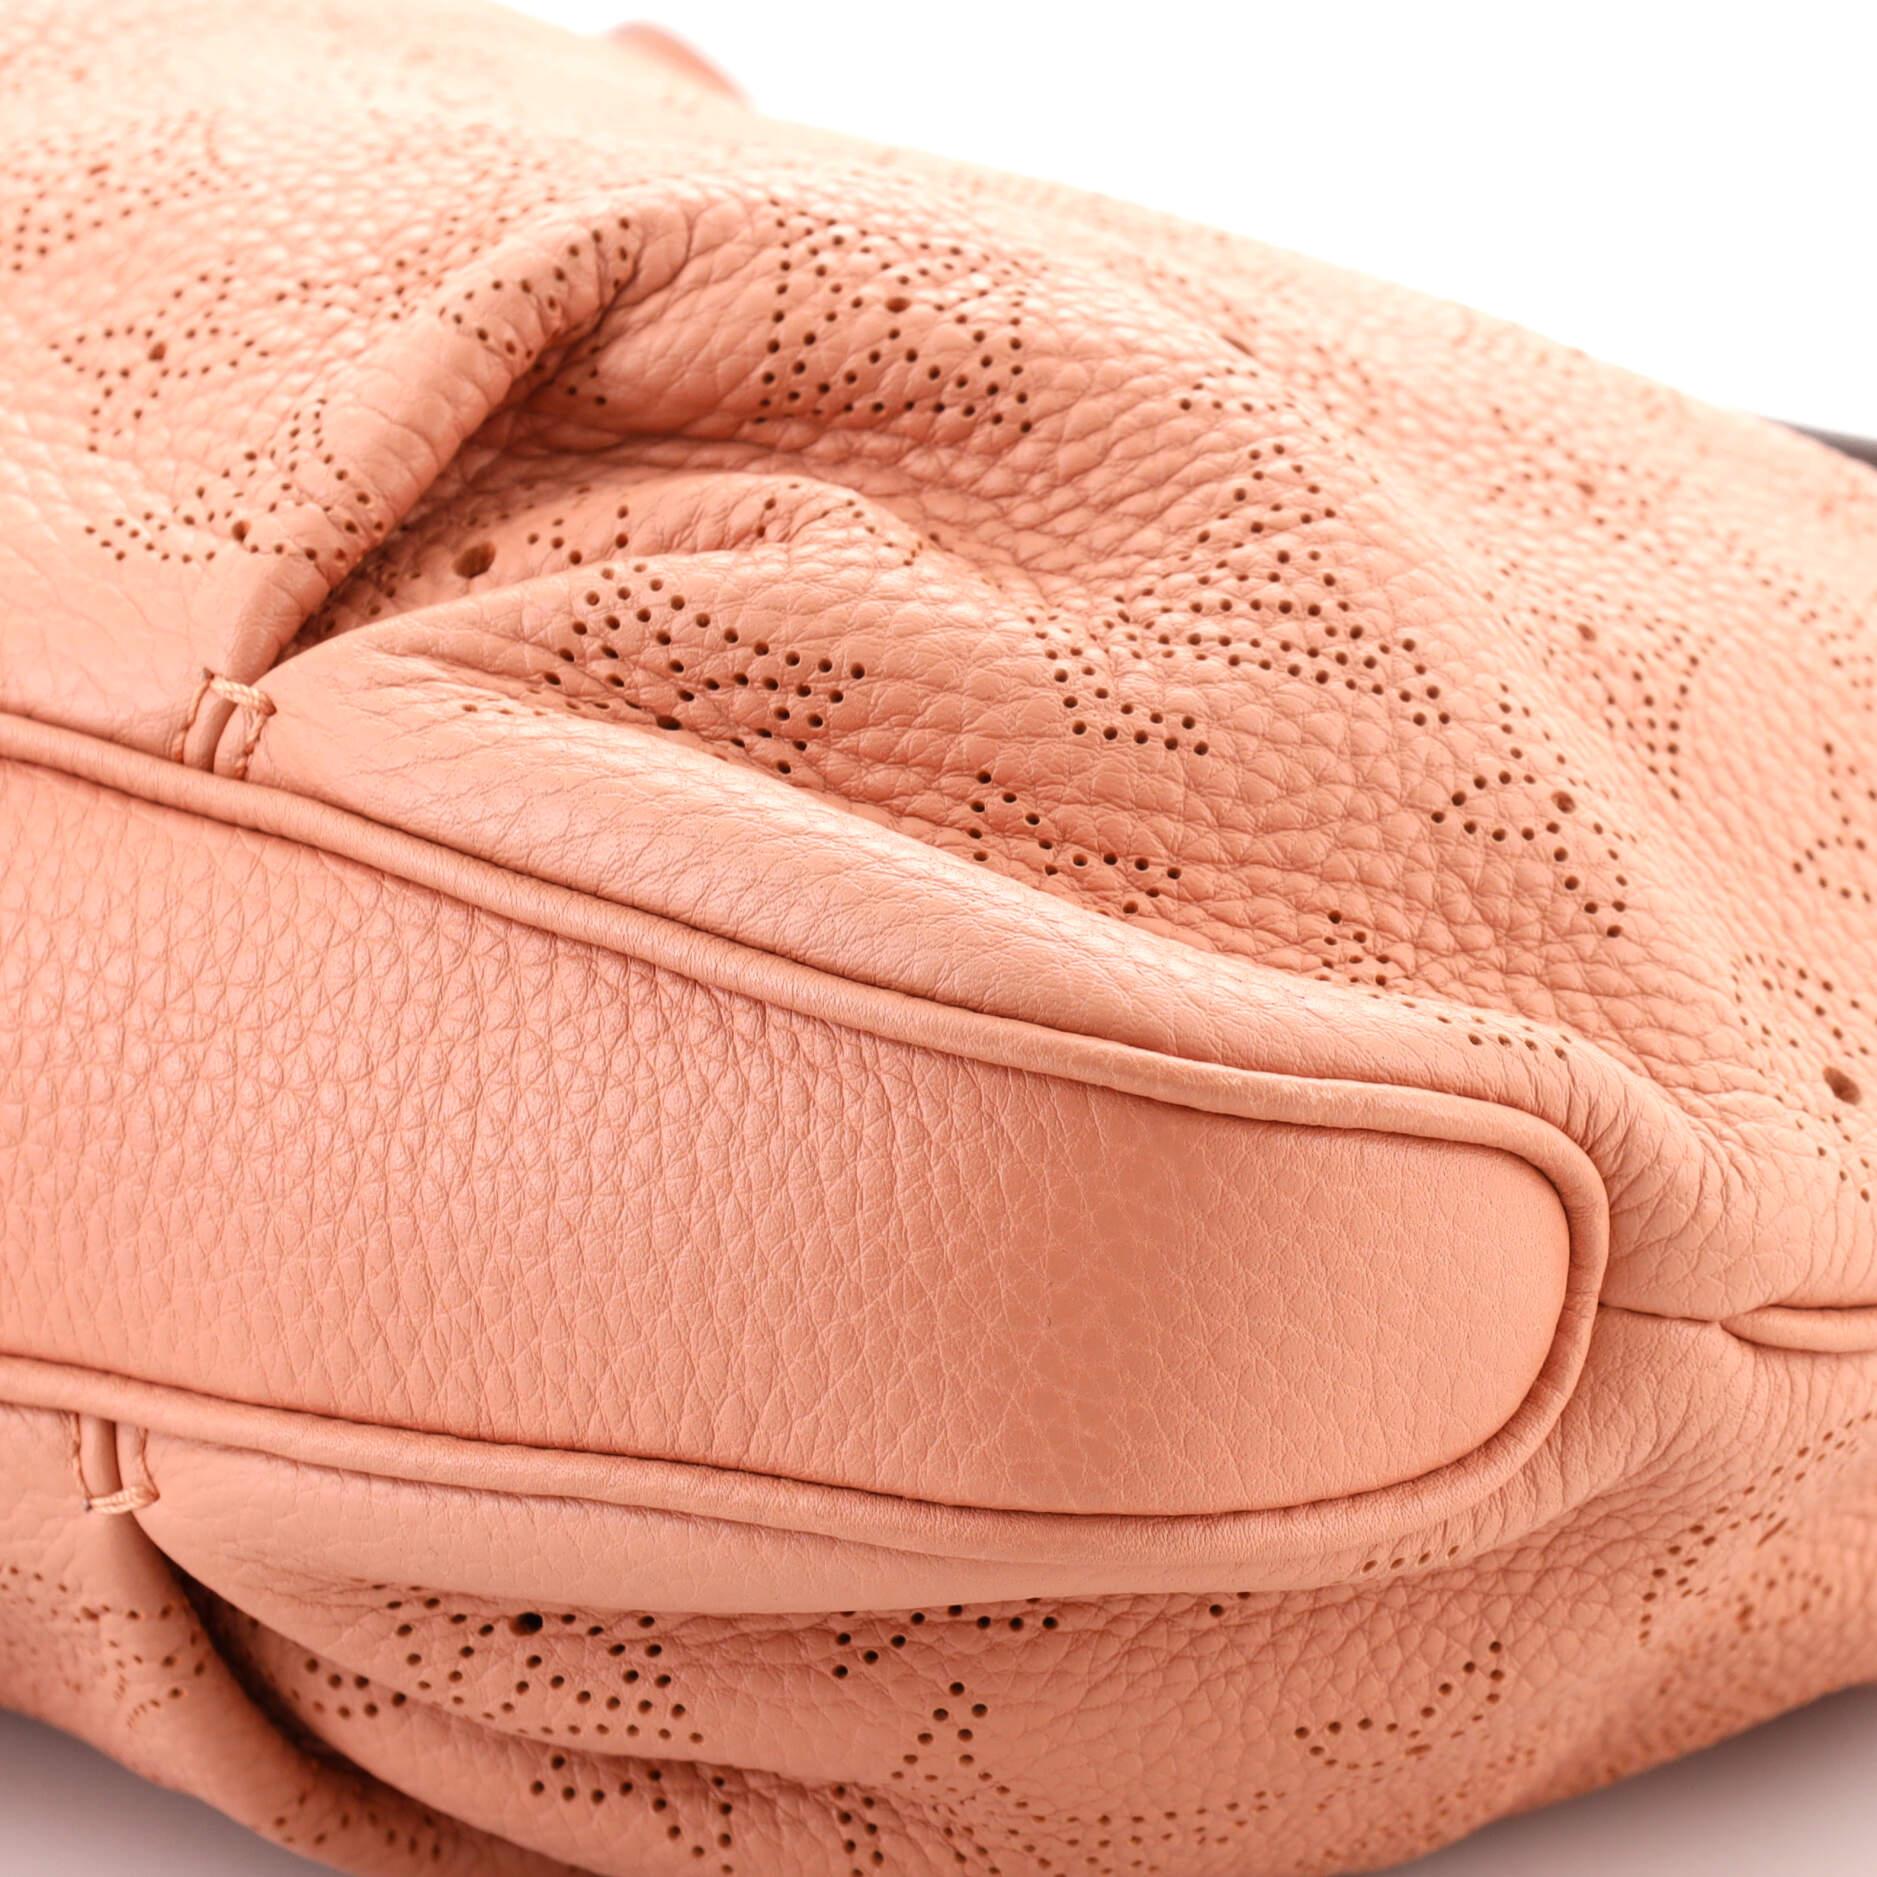 Louis Vuitton Selene Handbag Mahina Leather PM 2